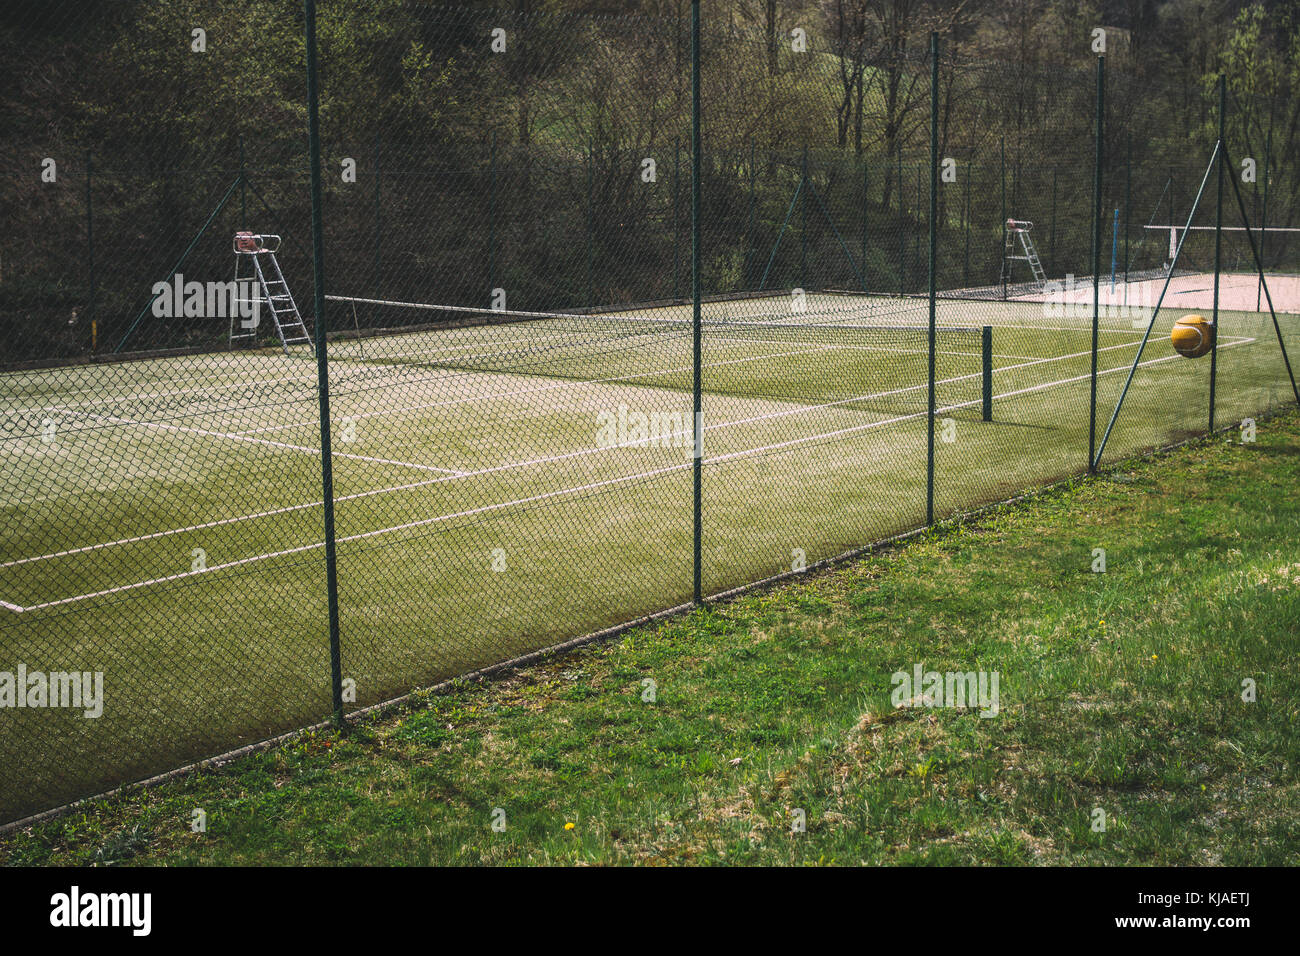 Grass tennis court behind a fence Stock Photo